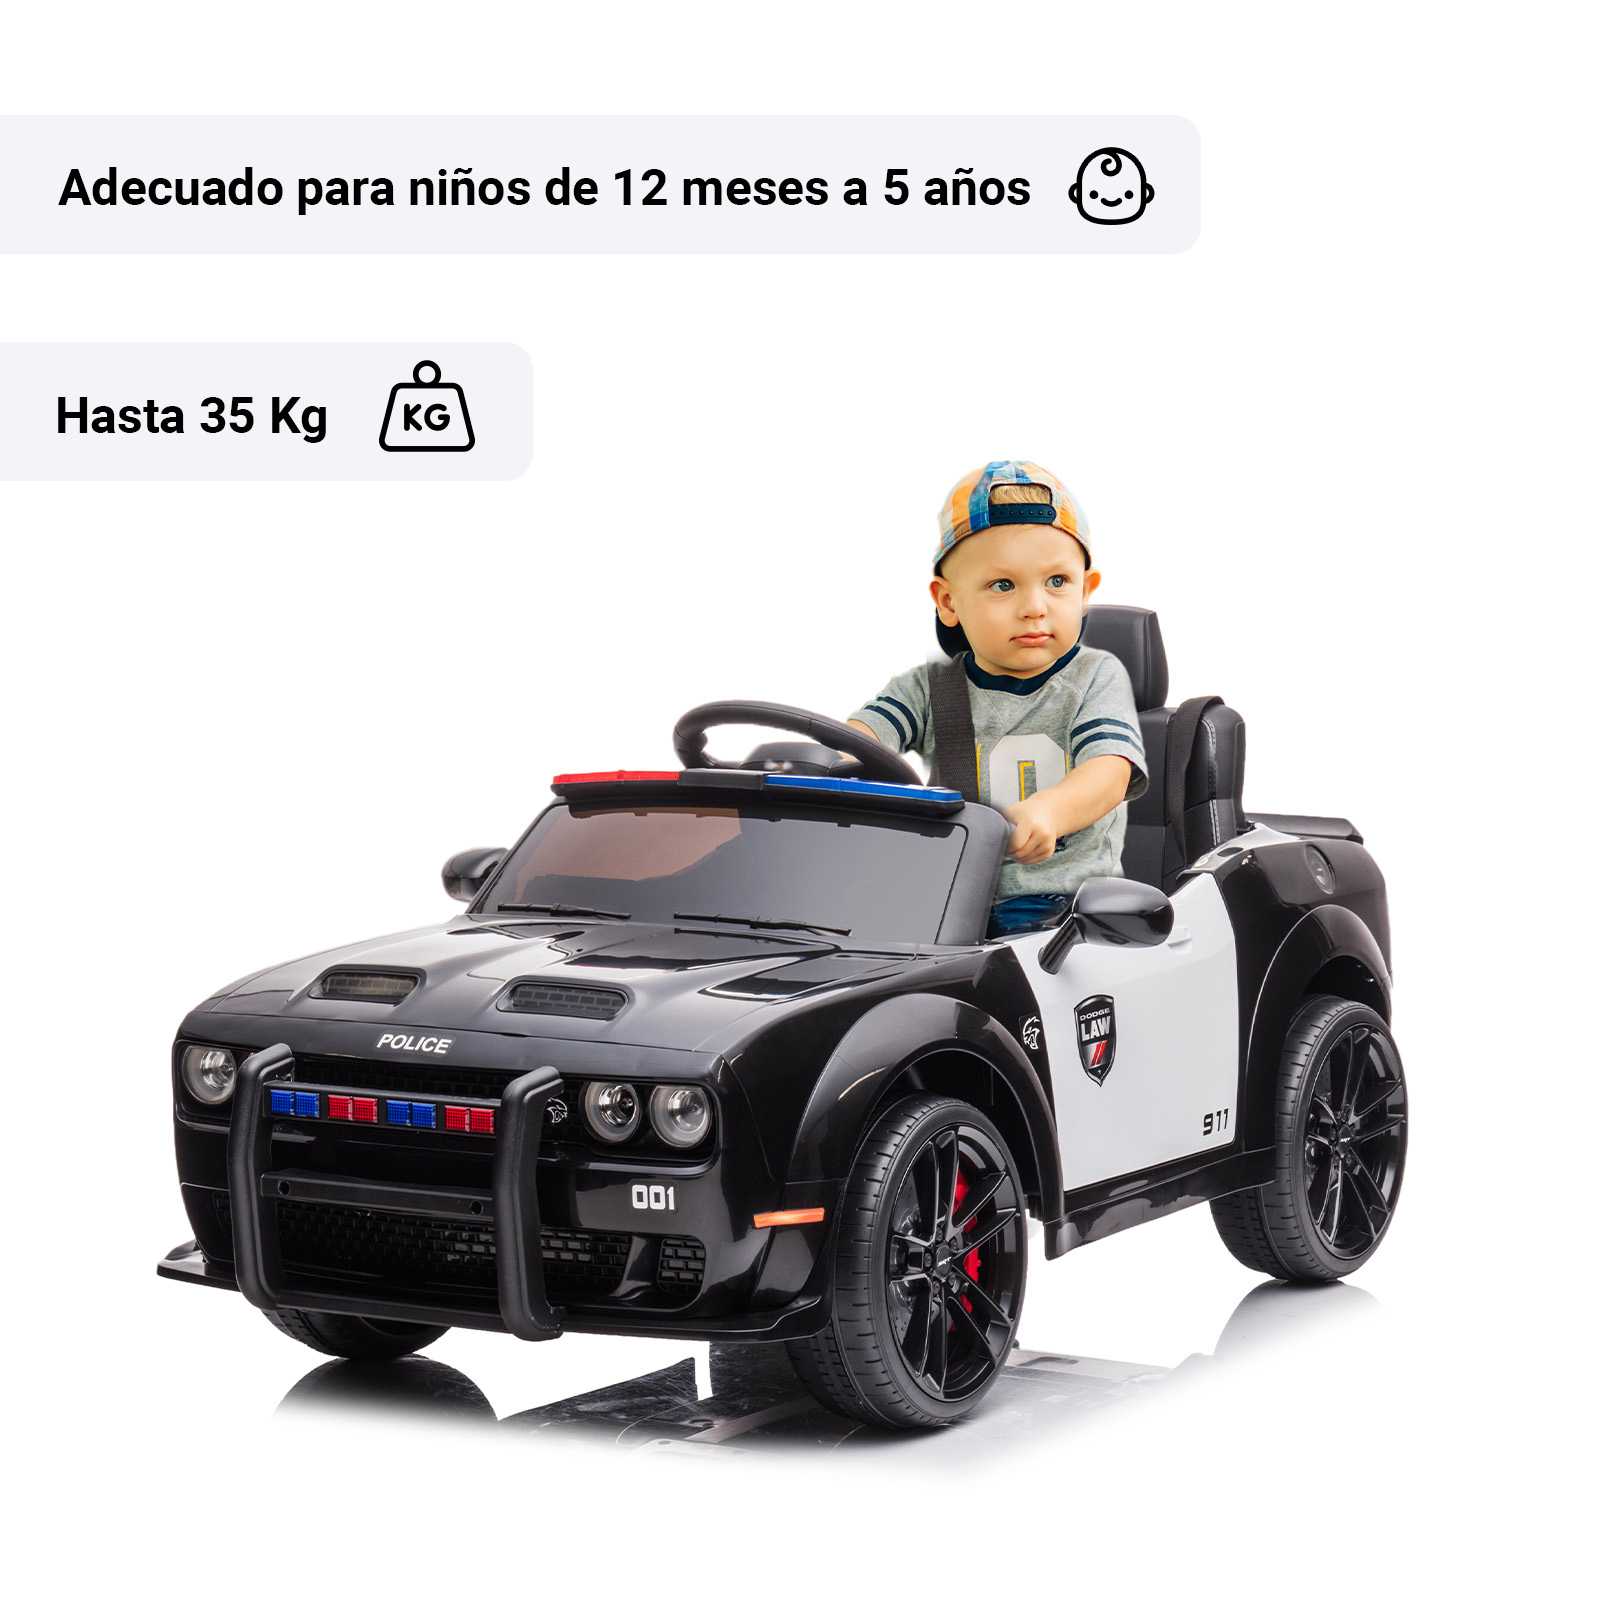 Dodge police con niño